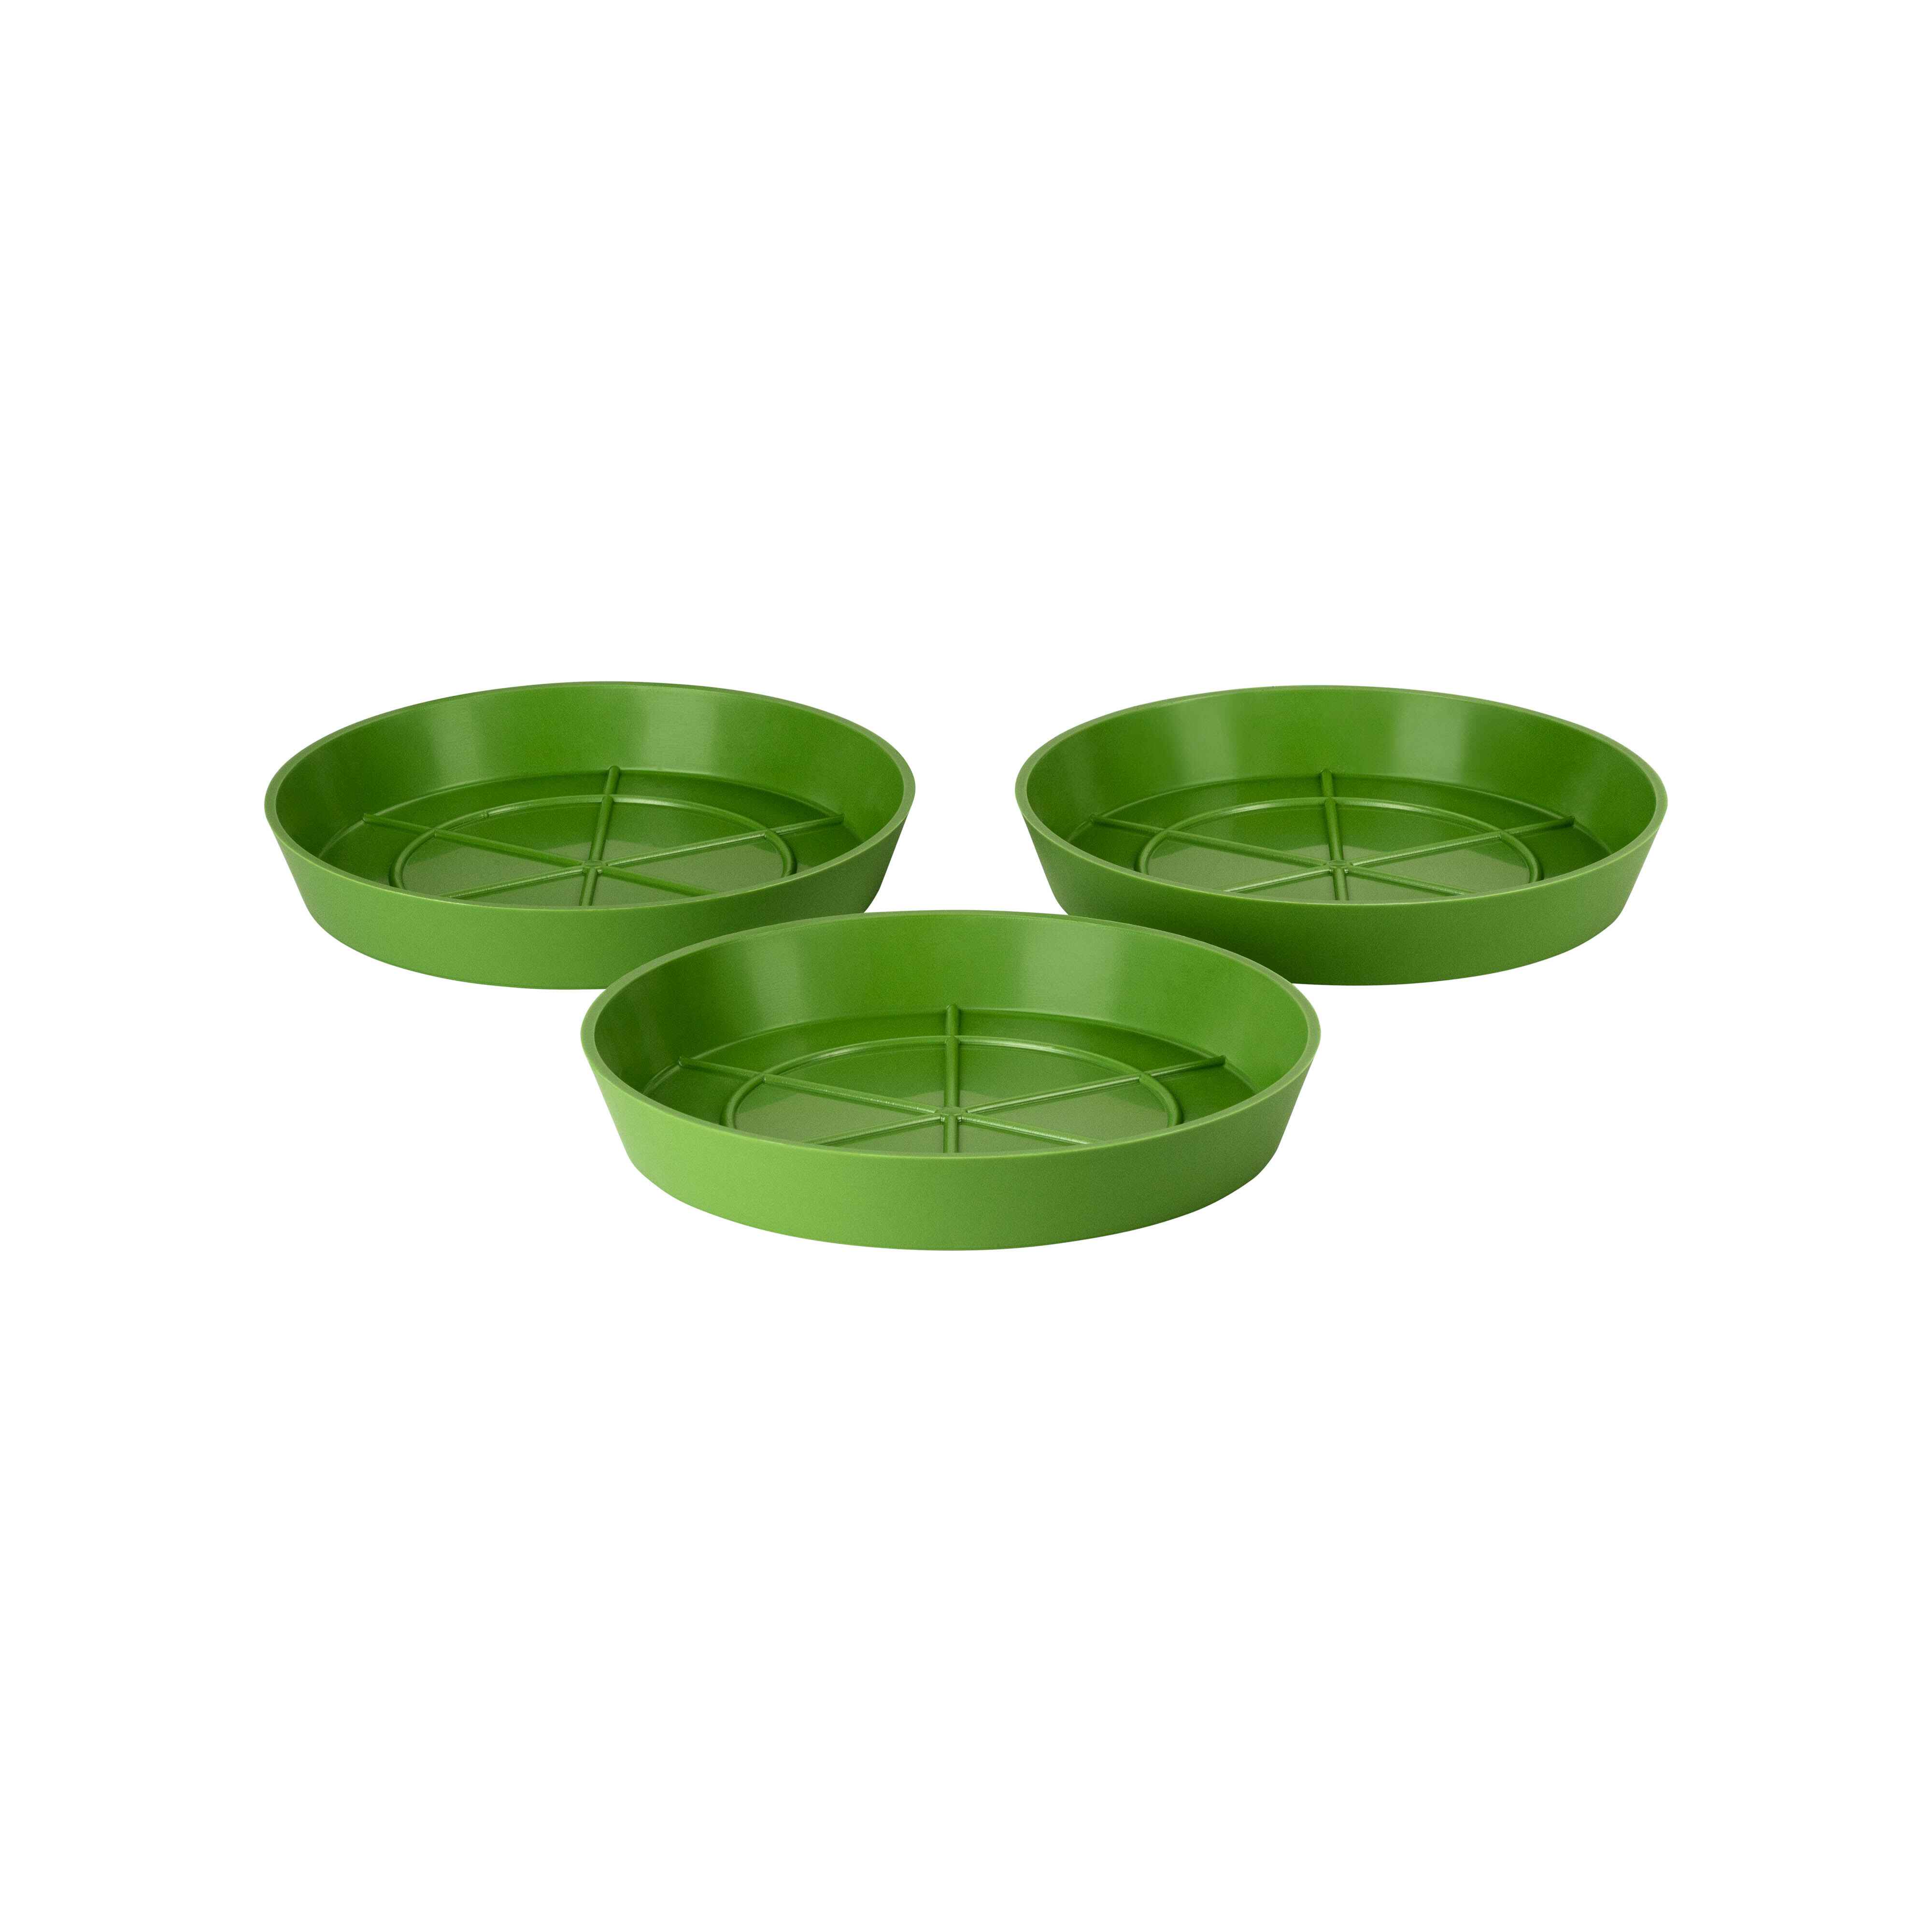 Picture of 3 17cm Green Saucers for Indoor/Outdoor Plants Pots